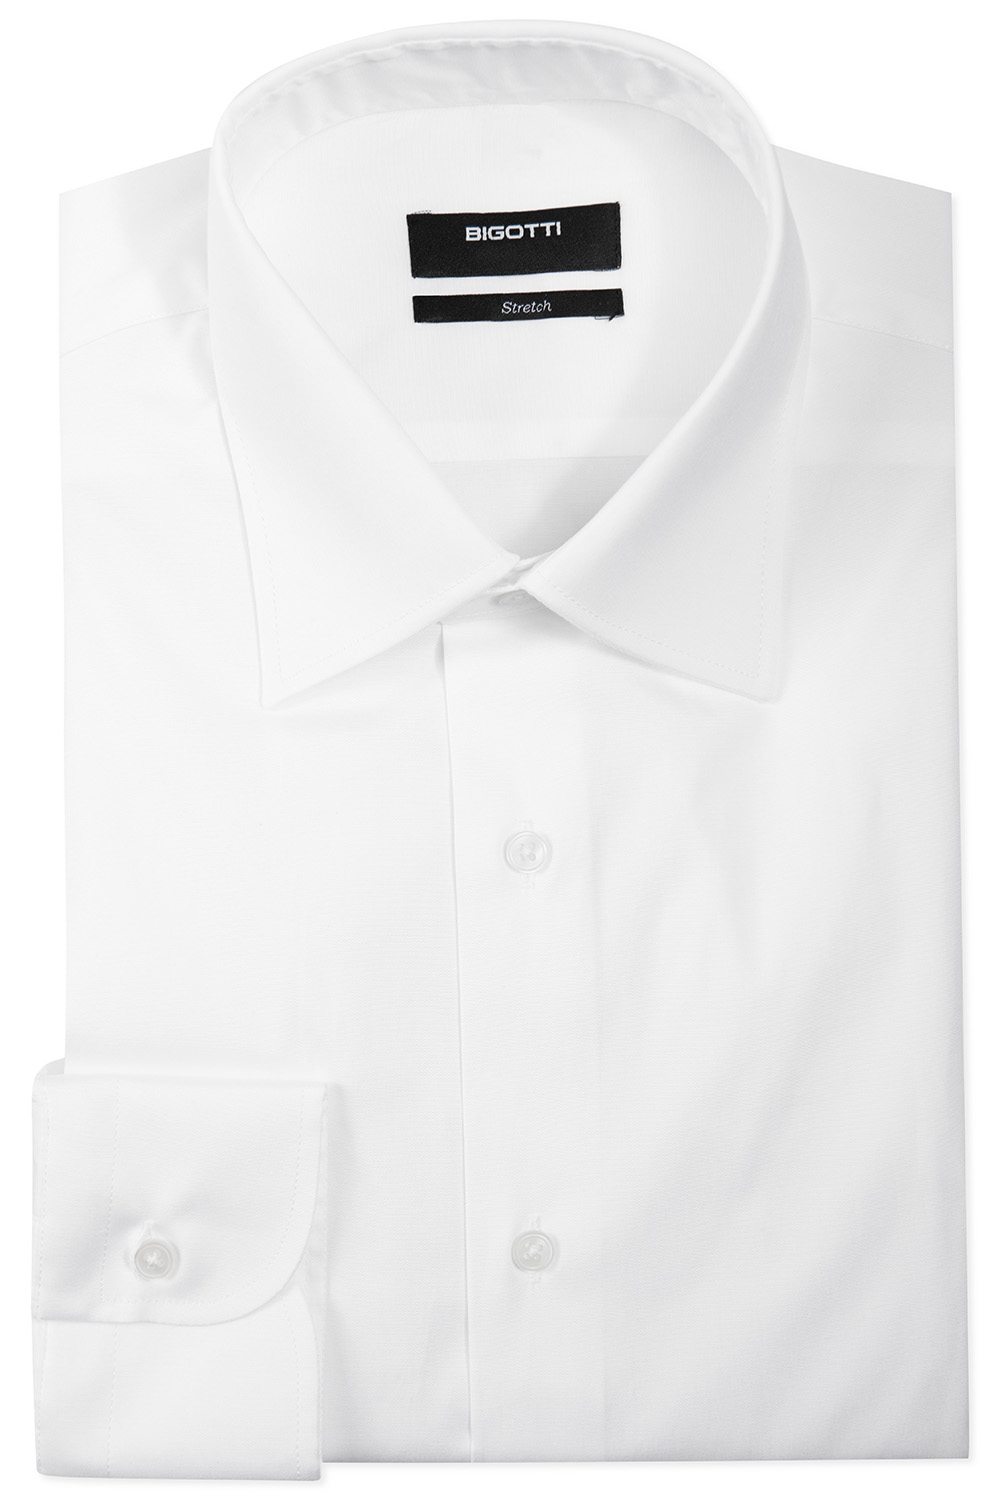 Sartoriale white plain shirt 0